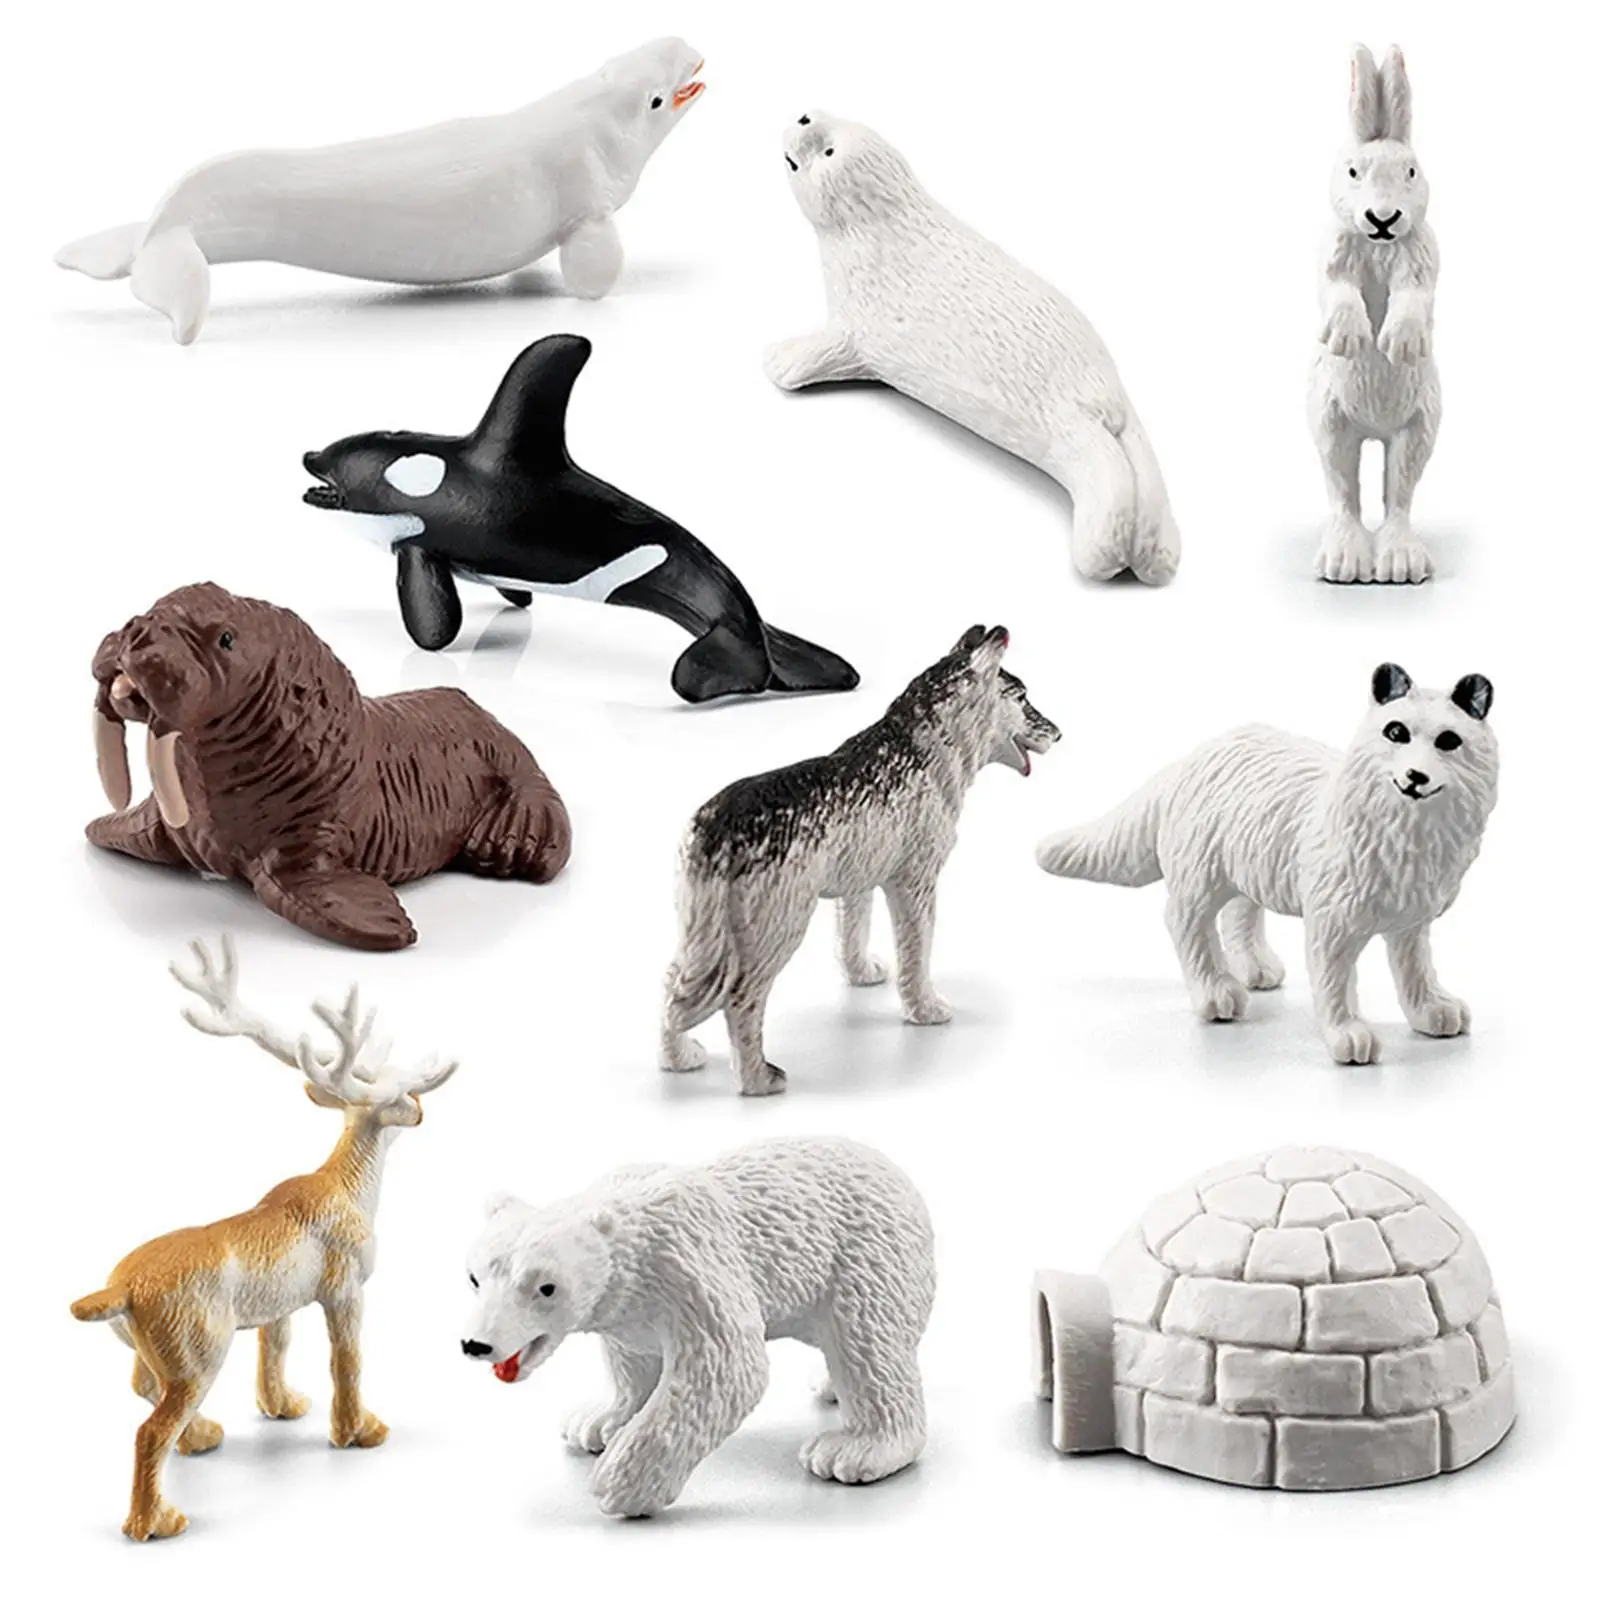 10 PCS Arctic Circle Sea Animals Figurines, Resin Arctic Animal Figure Set Includes Polar Bear,Caribou,Whales,Walrus,Igloo etcs